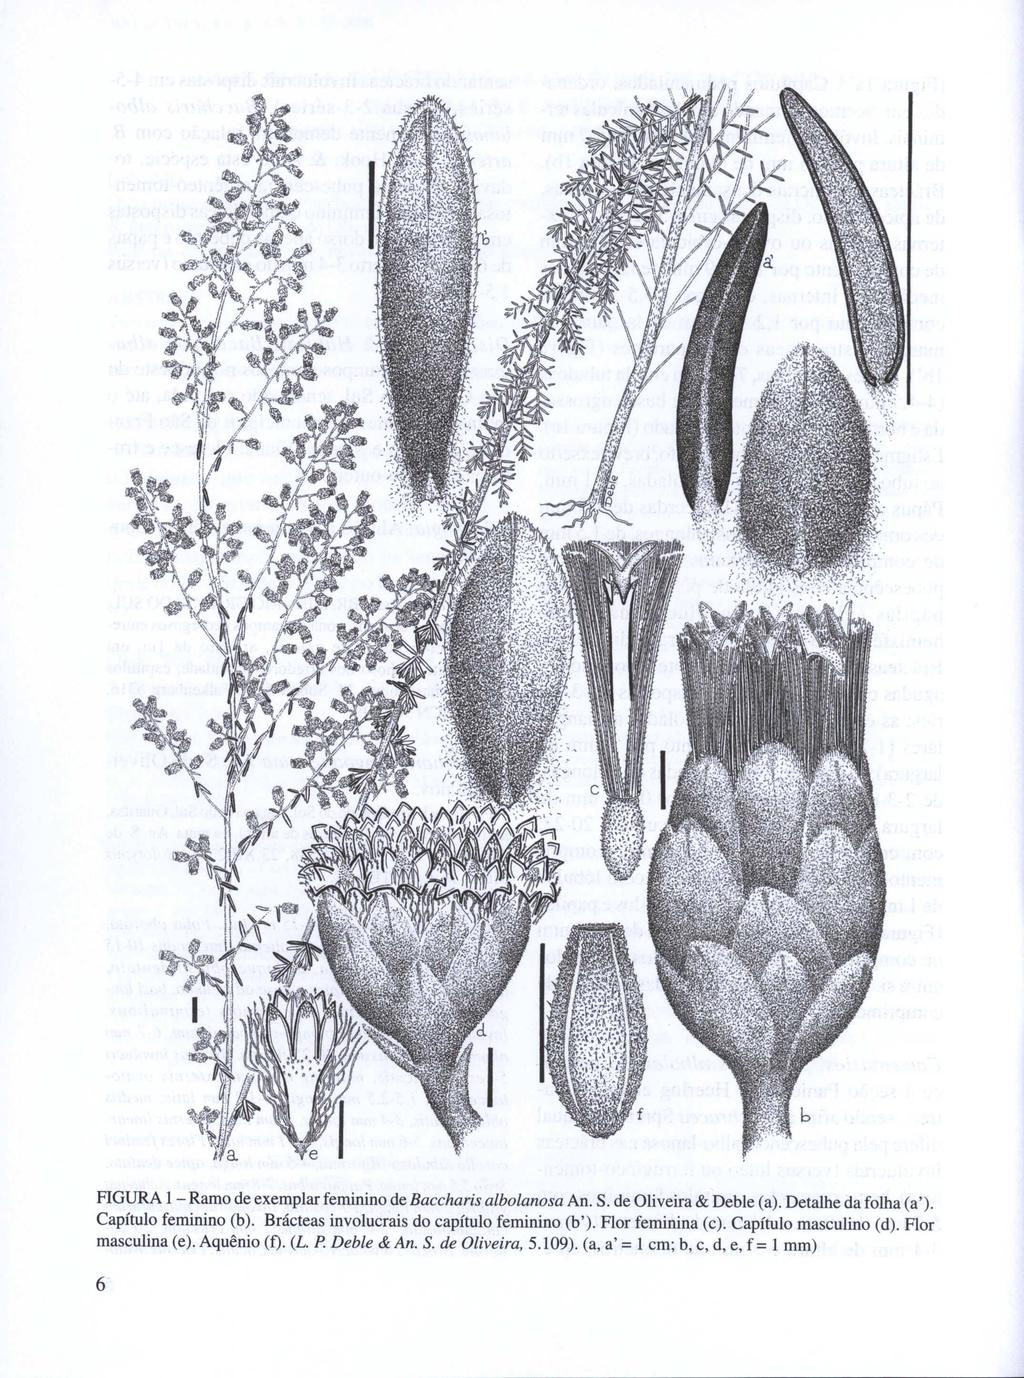 FIGURA I - Ramo de exemplar feminino de Baccharis albolanosa An. S. de Oliveira & Deble (a). Detalhe da folha (a'). Capítulo feminino (b).